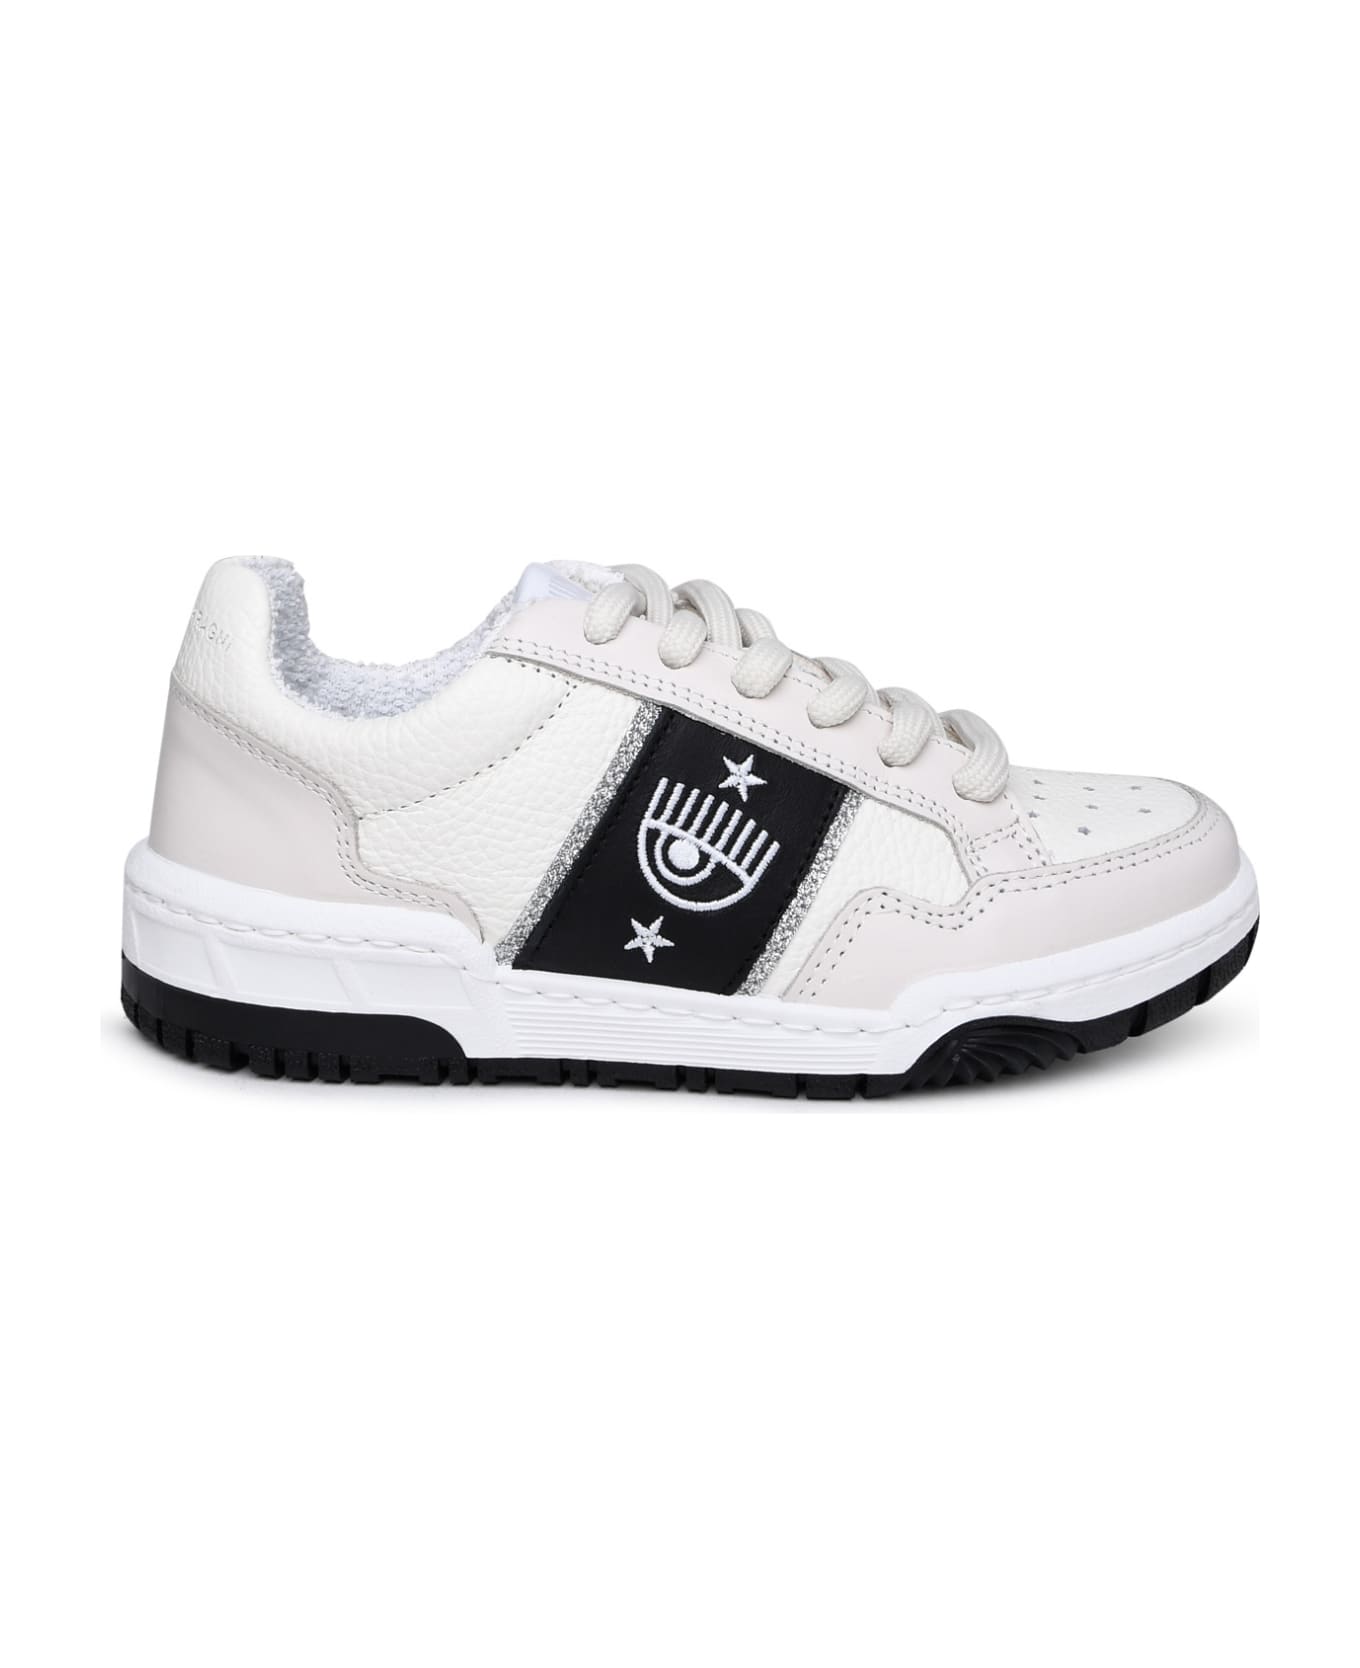 Chiara Ferragni Cf1 White Leather Sneakers - White スニーカー